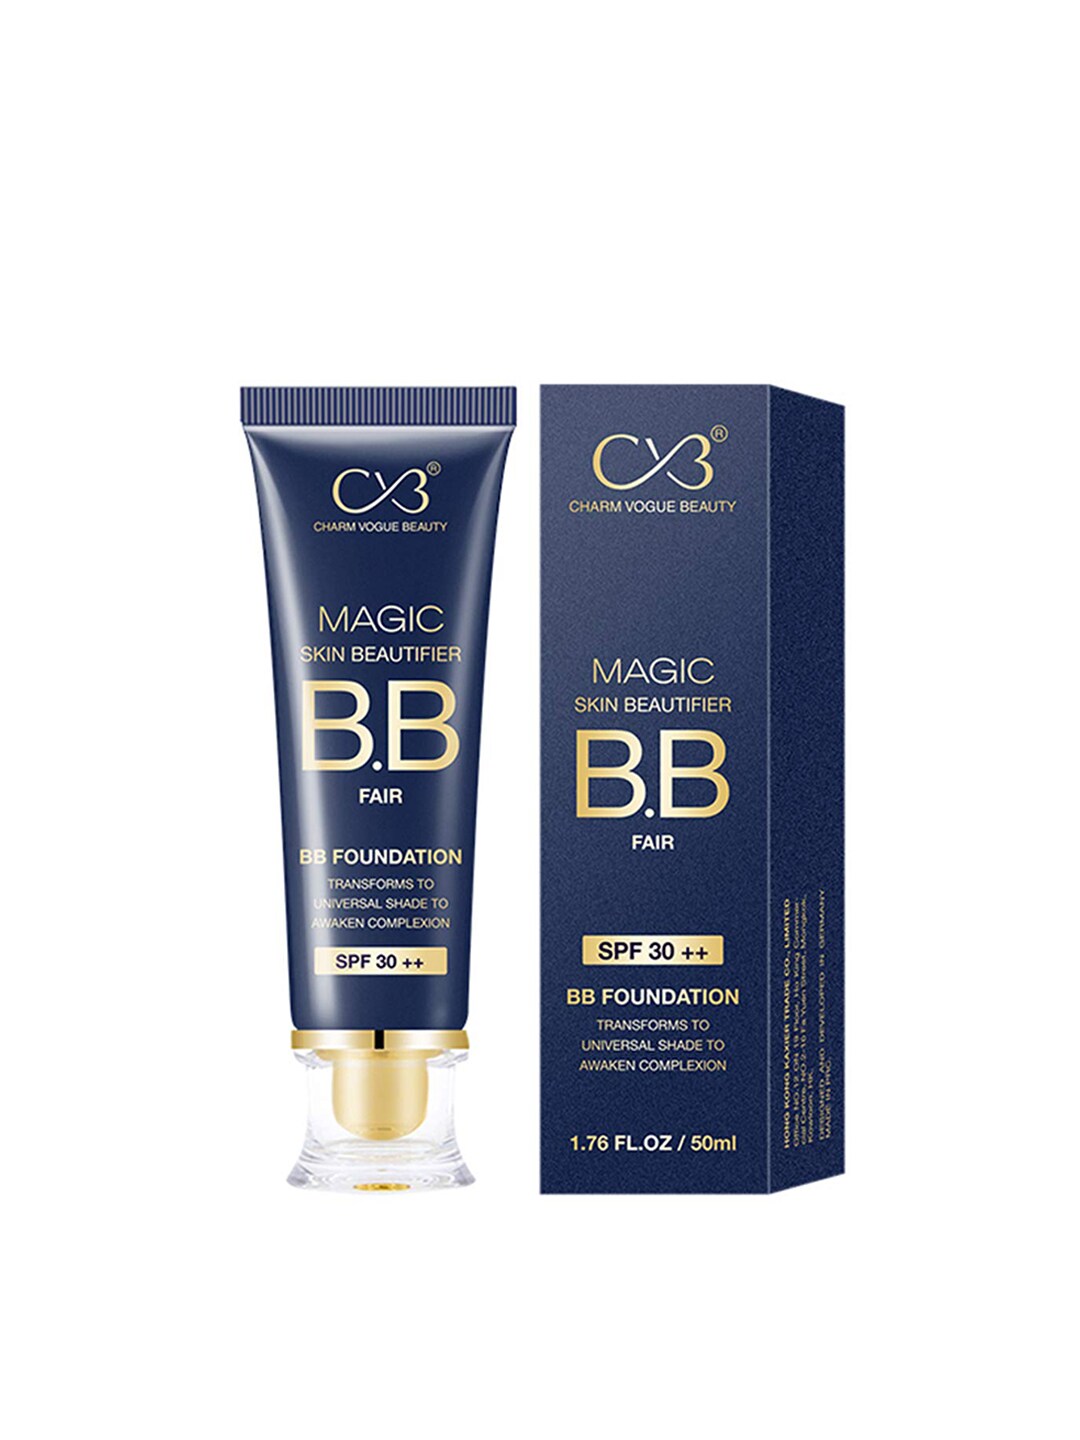 CVB Magic Skin Beautifier BB SPF30++ Foundation - Shade 01 Price in India